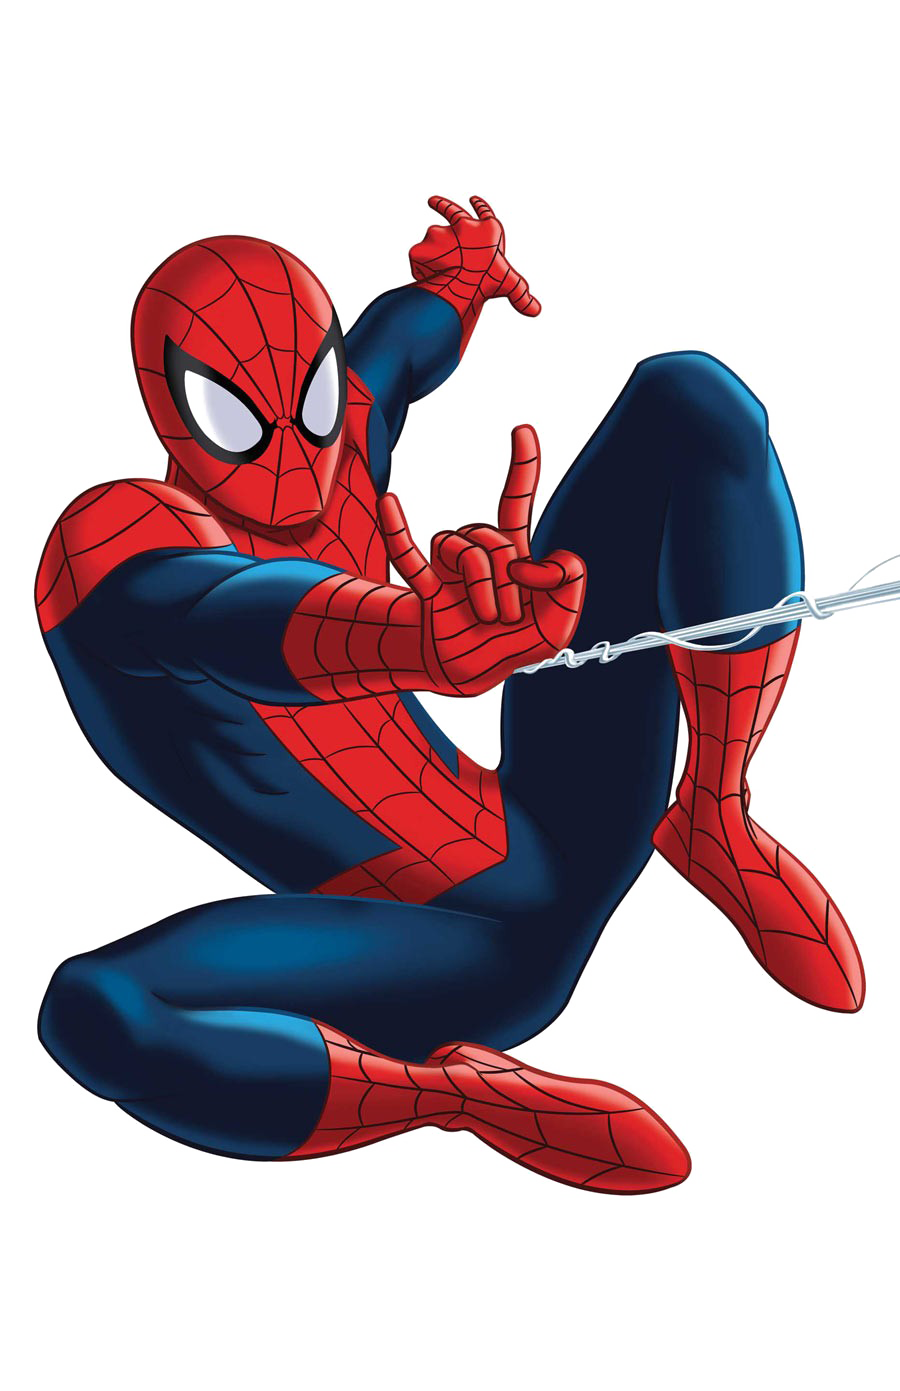 Spider-Man Cartoon Download PNG Image | PNG Arts